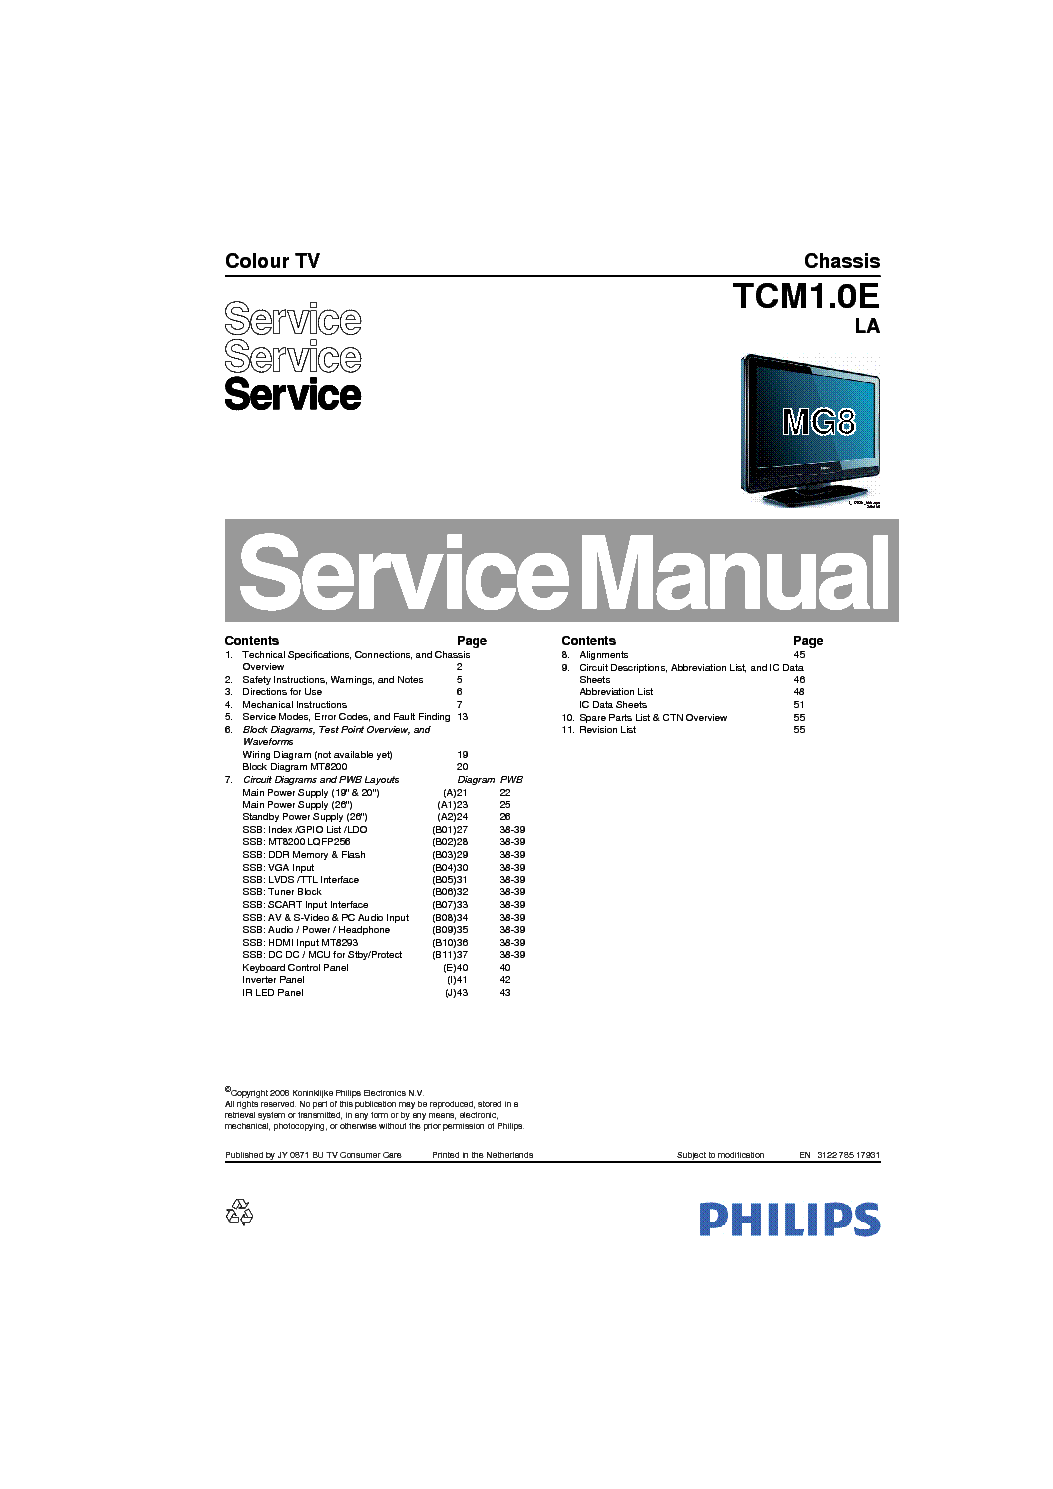 PHILIPS 22PFL3403-60 CHASSIS TCM1.0E-LA service manual (1st page)